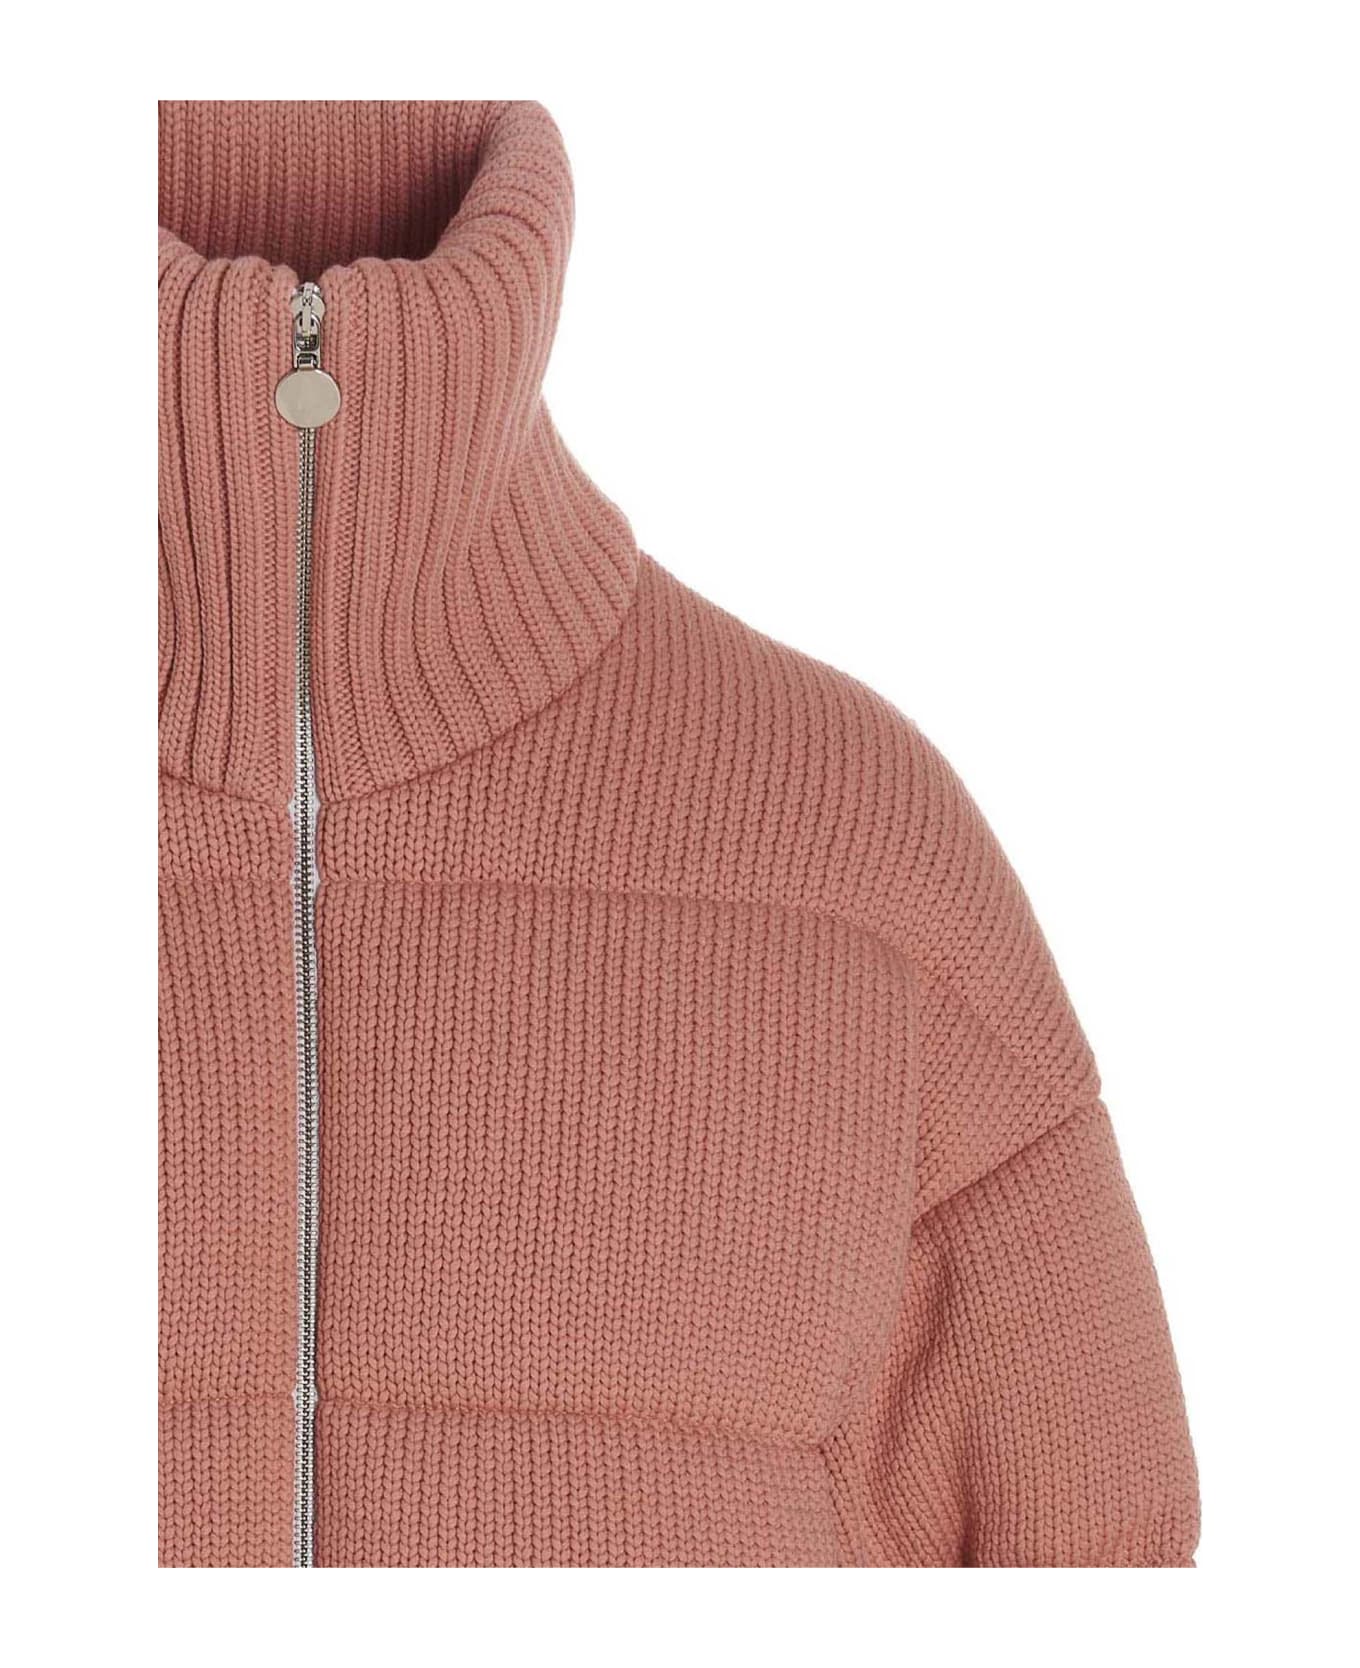 IENKI IENKI Knitted Puffer Jacket - Pink コート